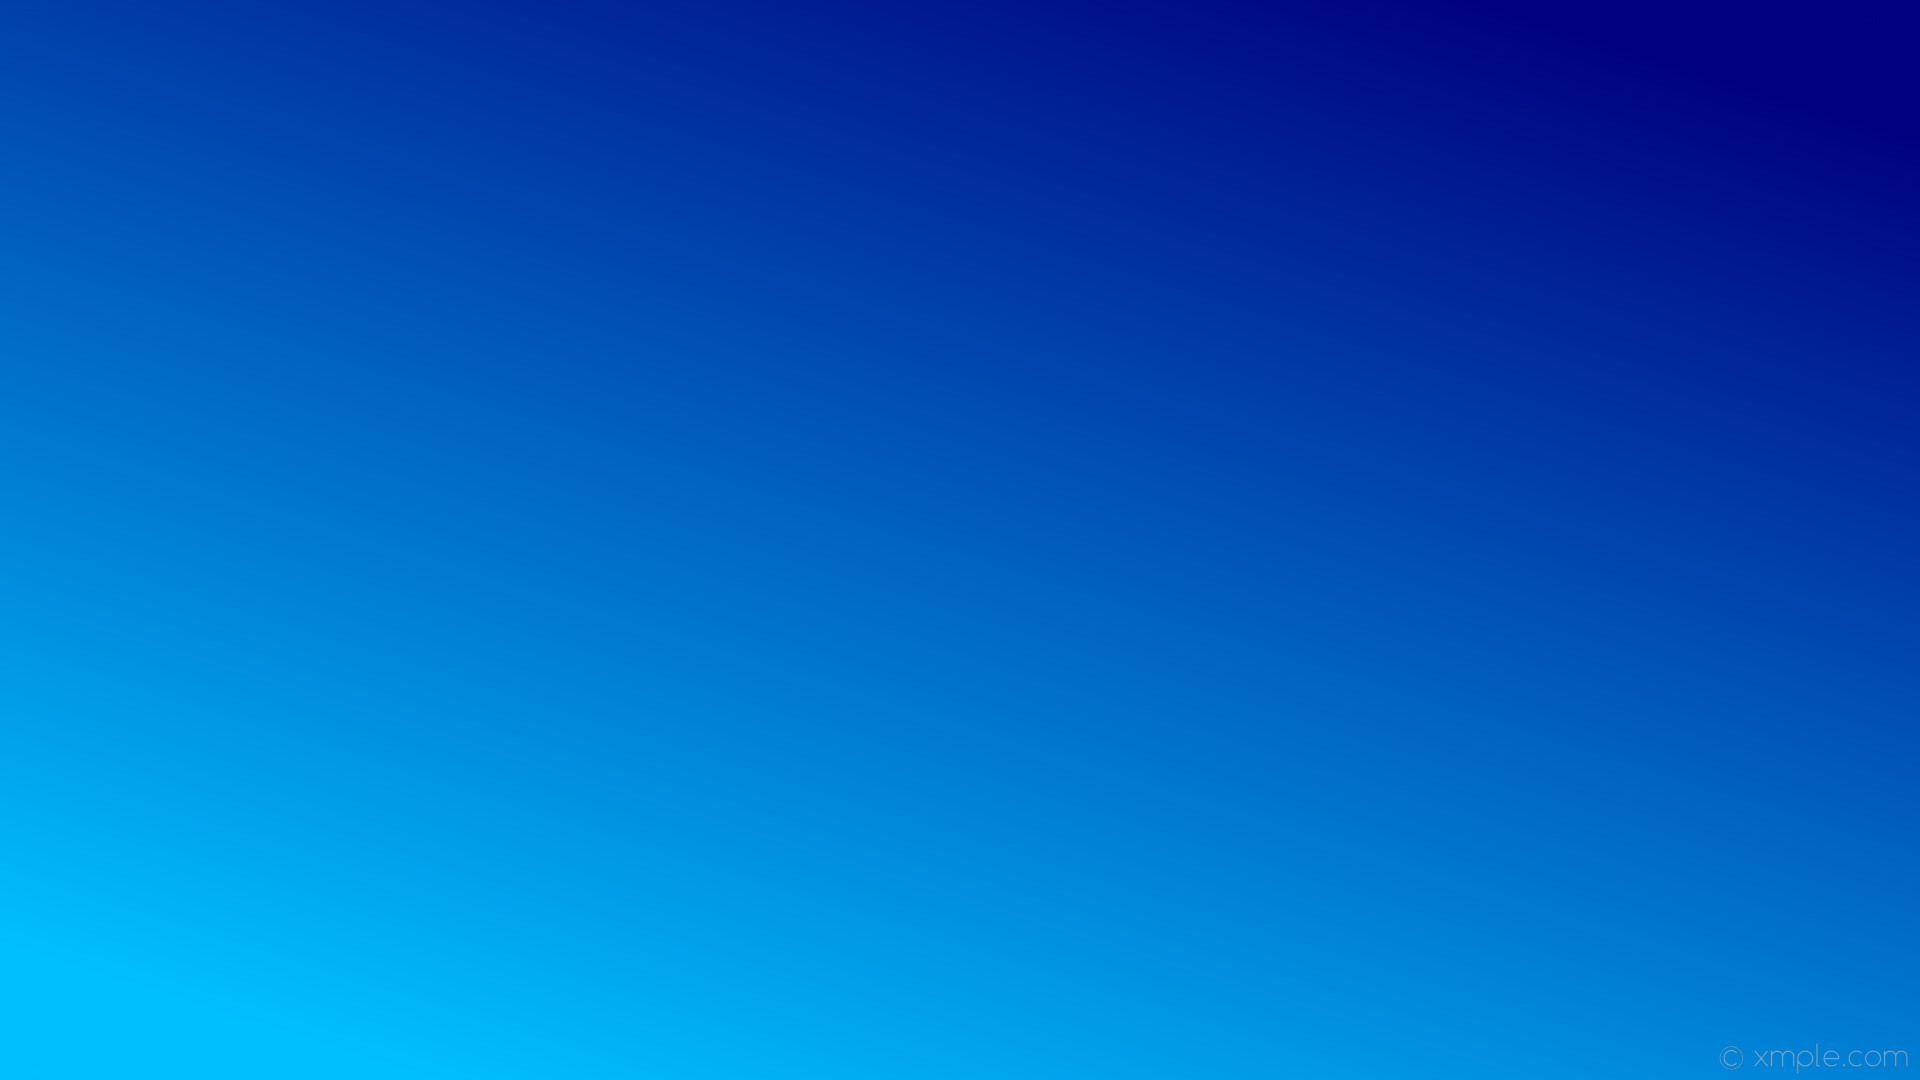 1920x1080 wallpaper linear blue gradient deep sky blue navy #00bfff #000080 225Â°